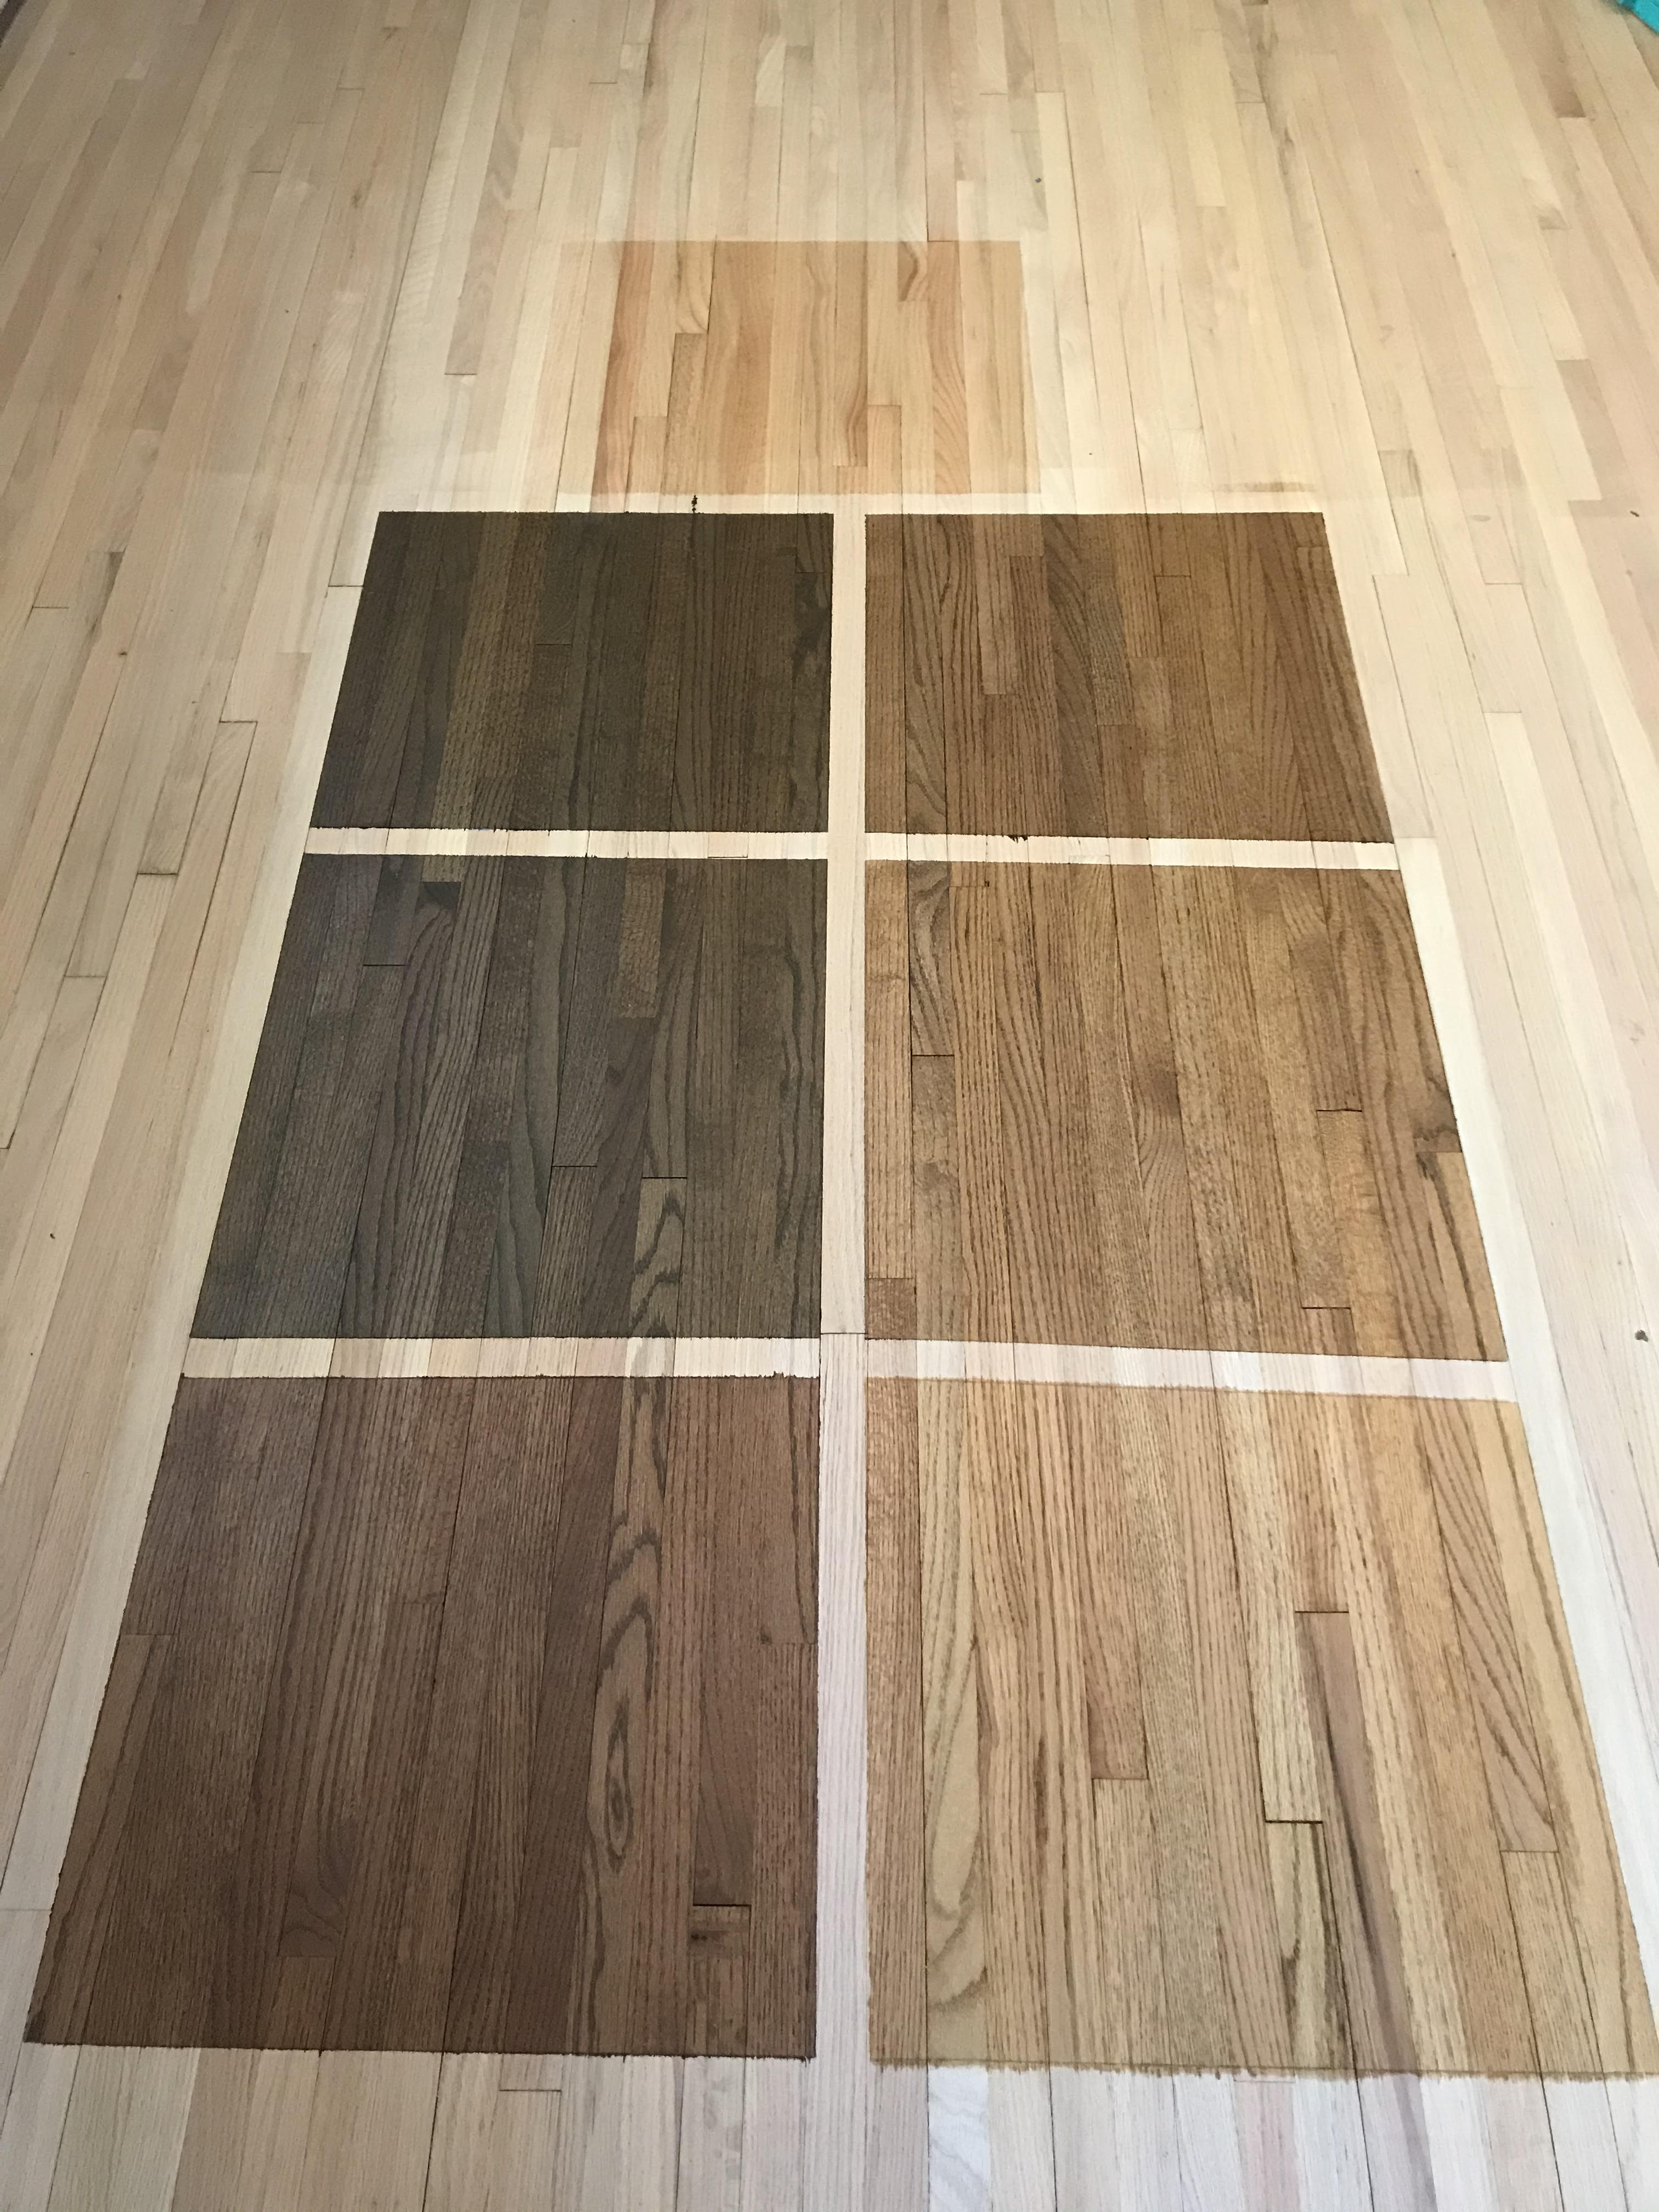 Hardwood Floor Refinishing Ub, Hardwood Floor Refinishers In My Area